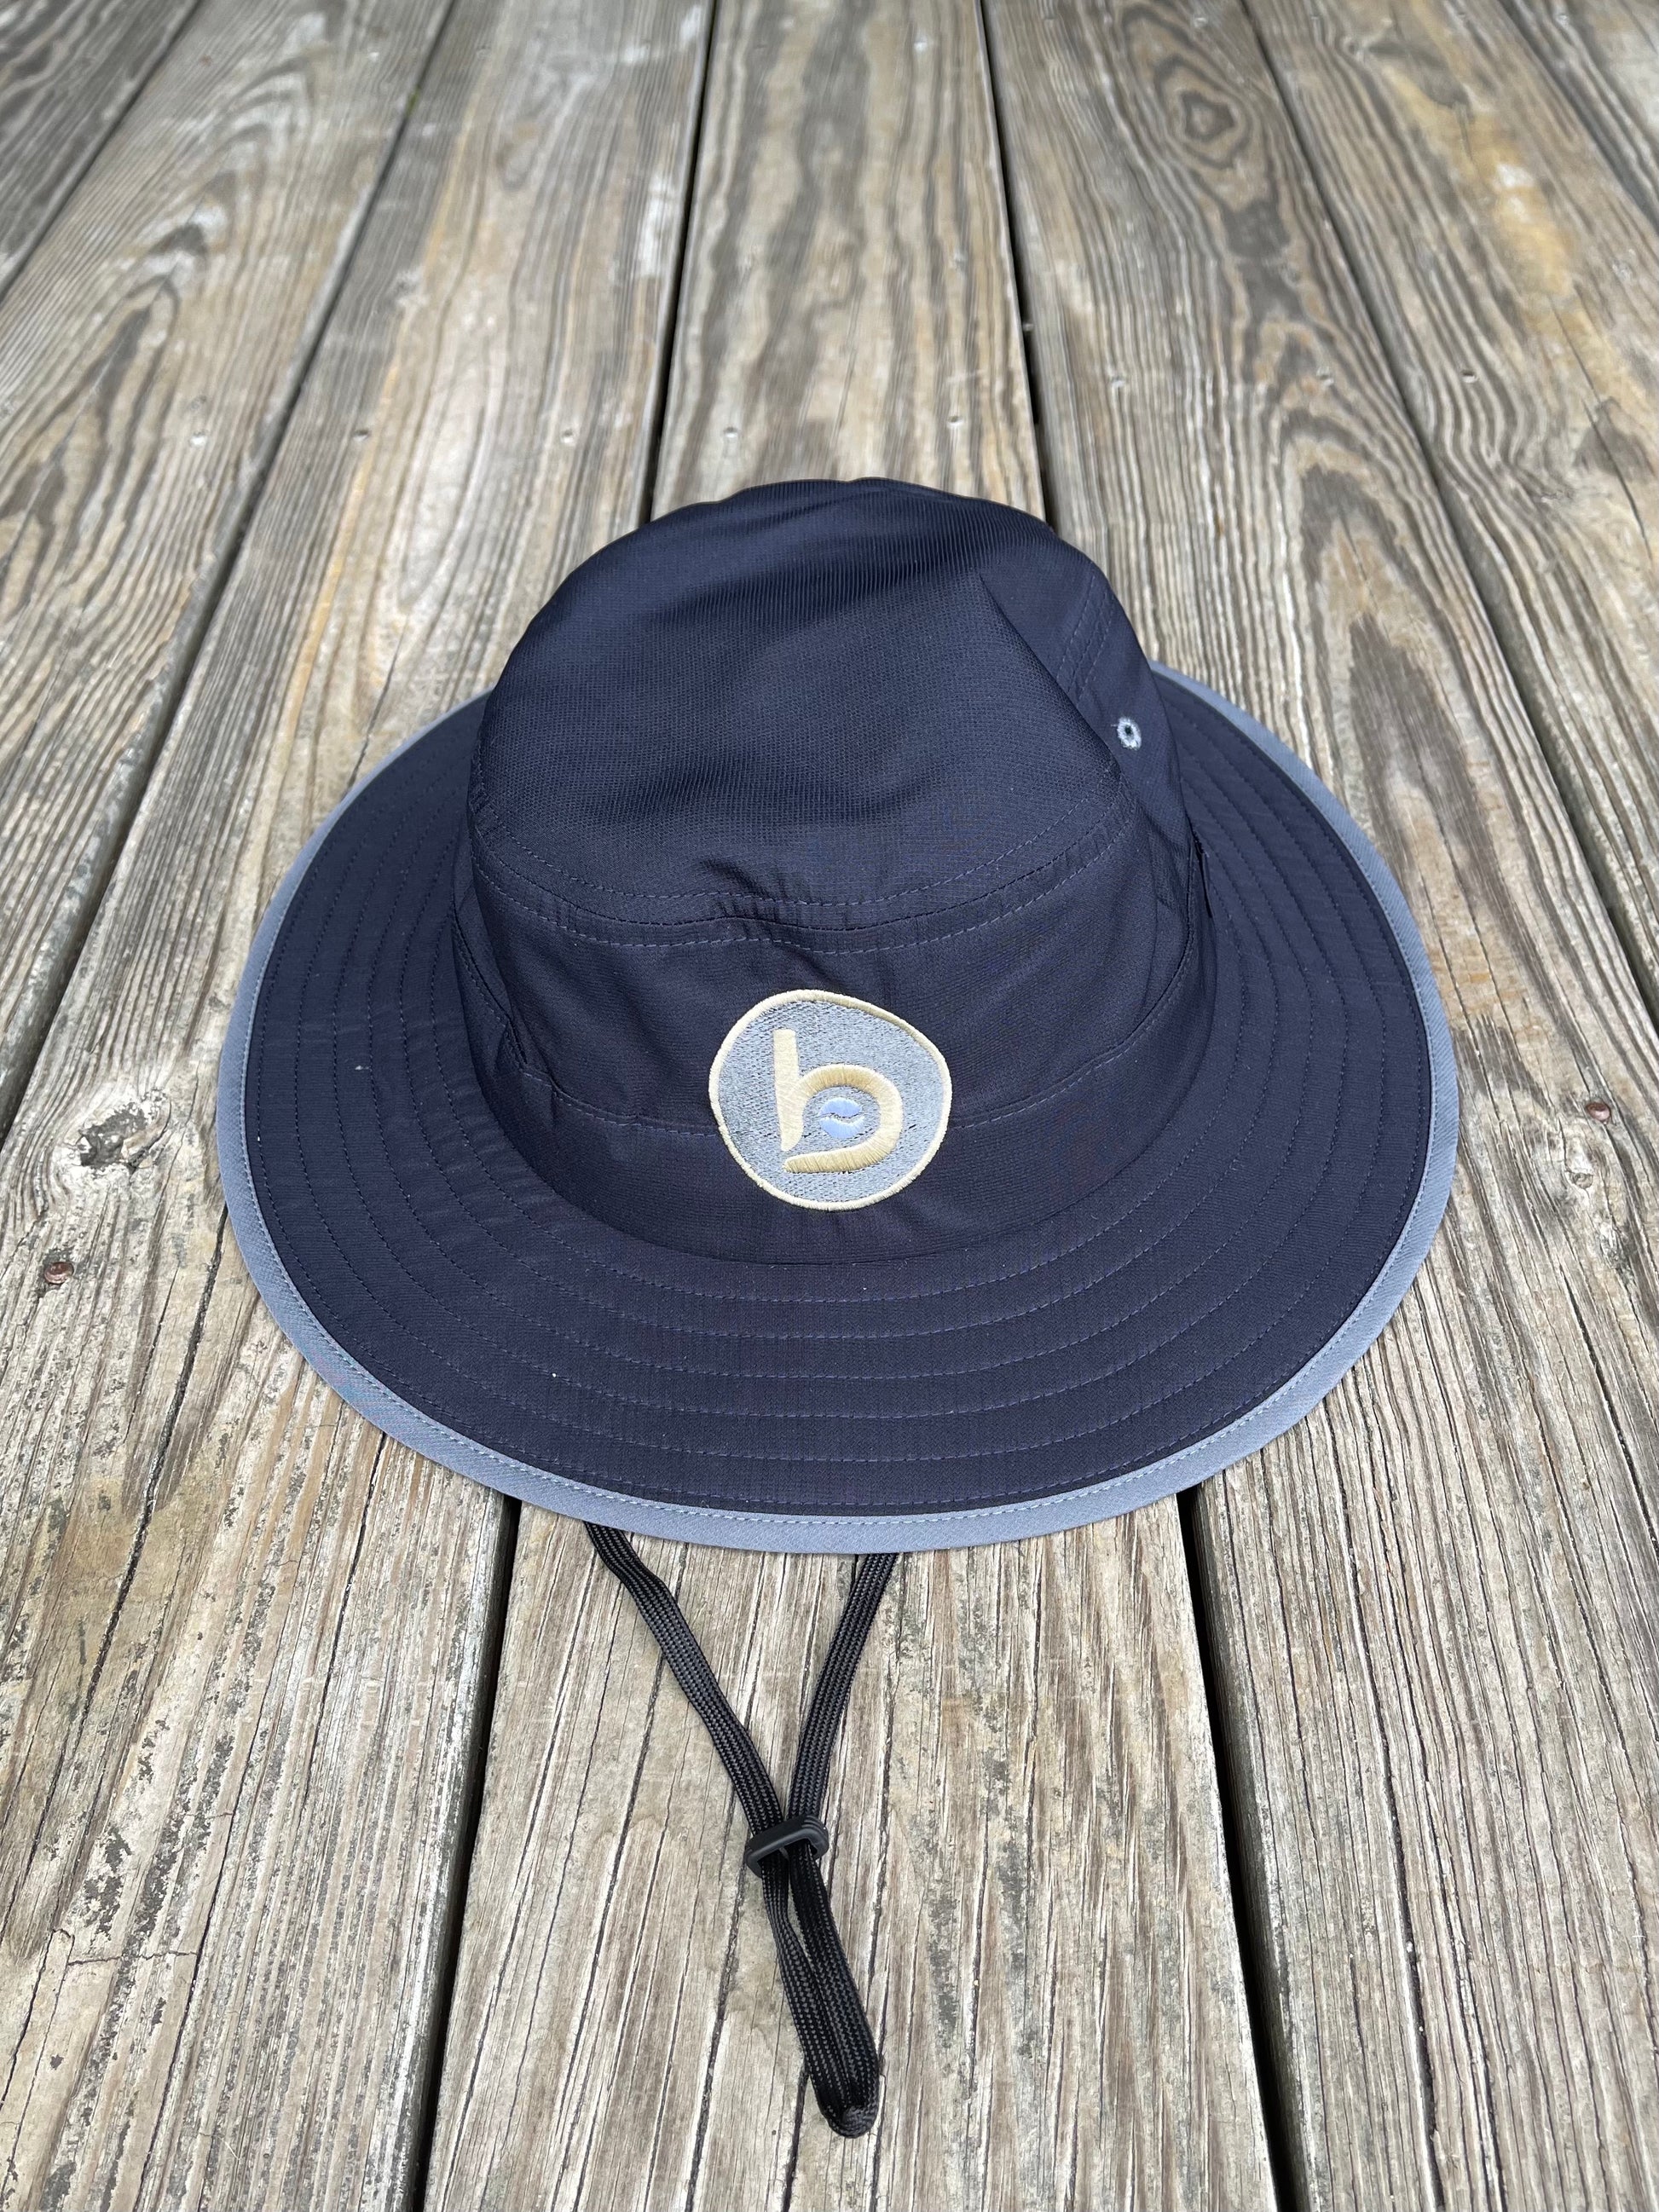 Bradley Bucket/Boonie (circle b Baseball logo) hat